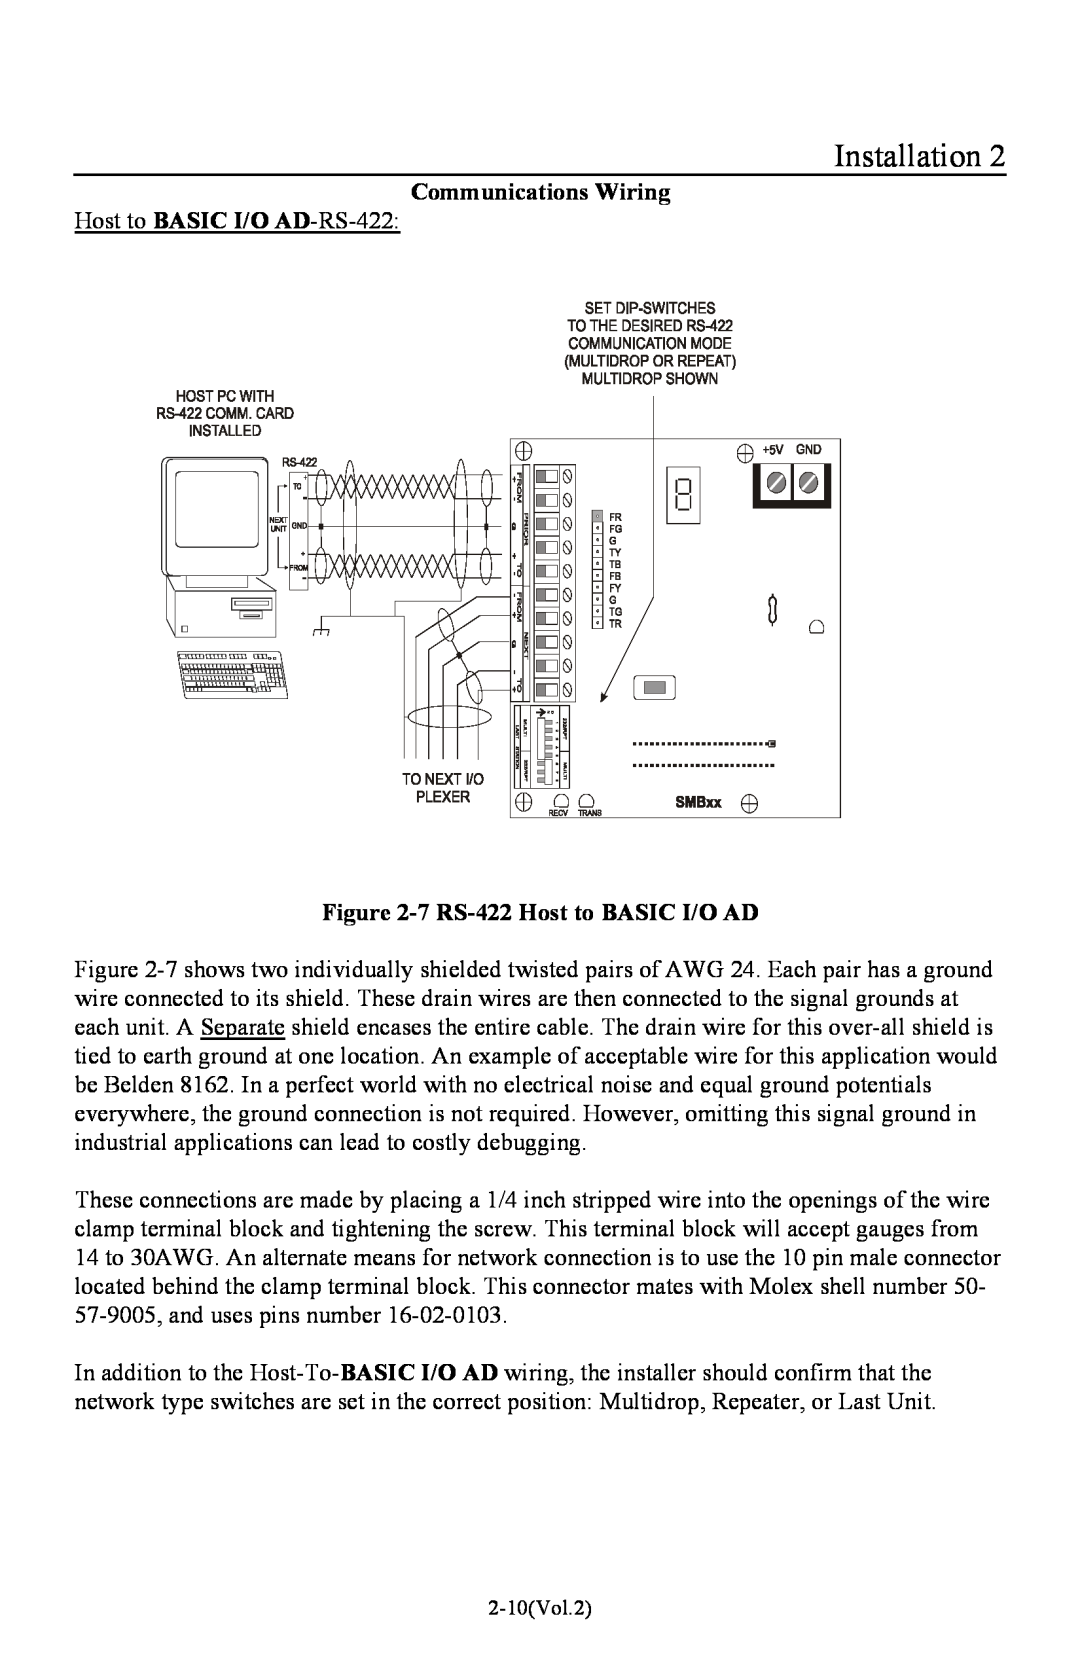 I-O Display Systems Basic I/O Product manual Installation, Communications Wiring, 7 RS-422 Host to BASIC I/O AD 